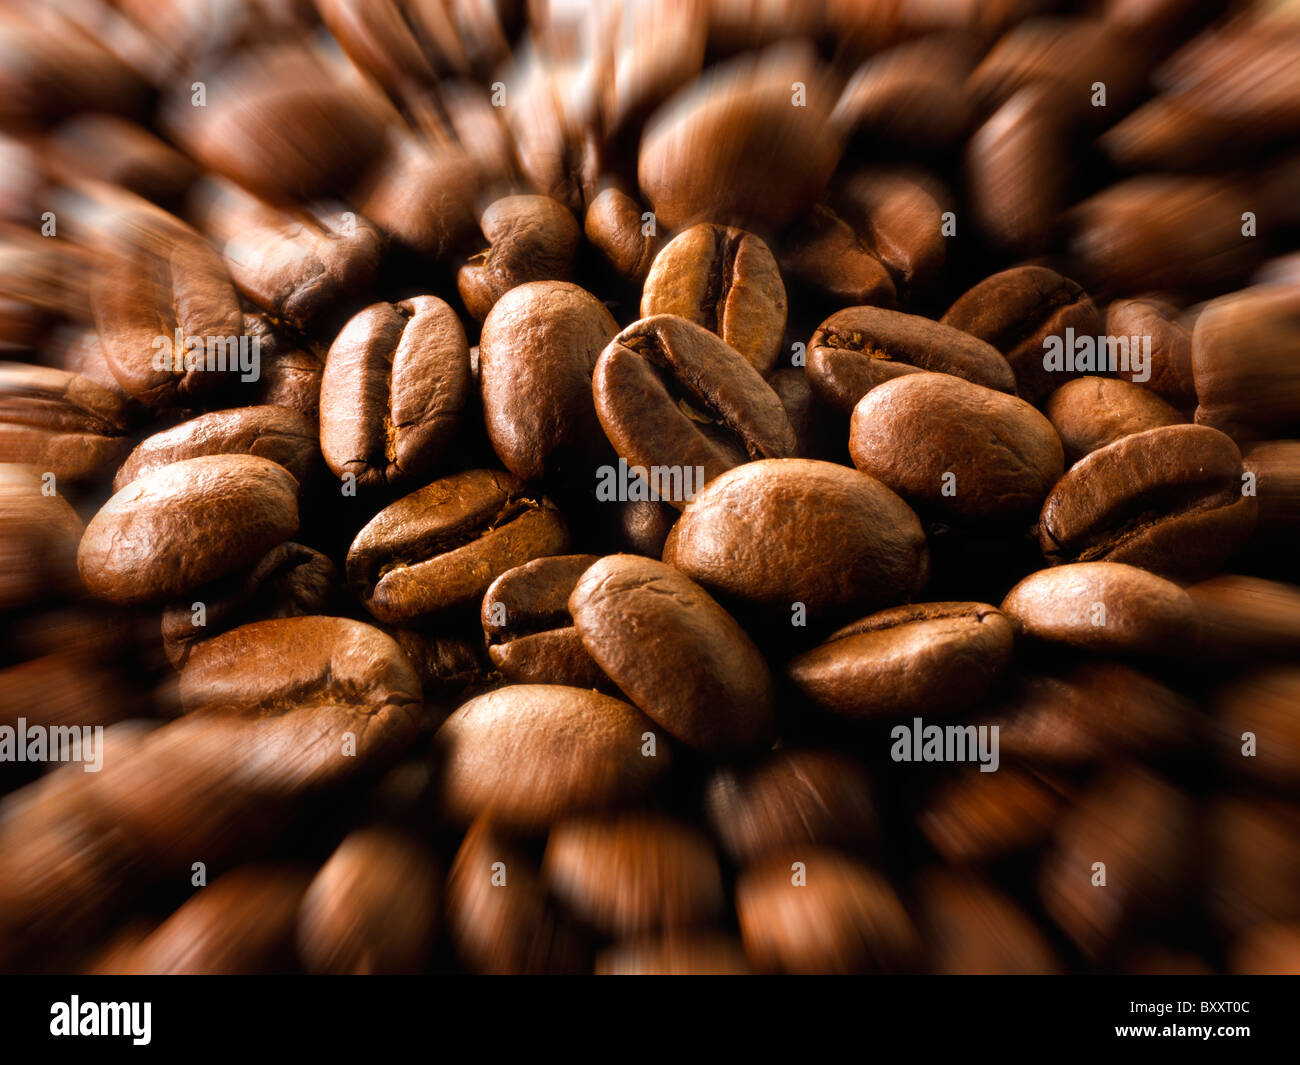 Coffee beans stock photos Stock Photo